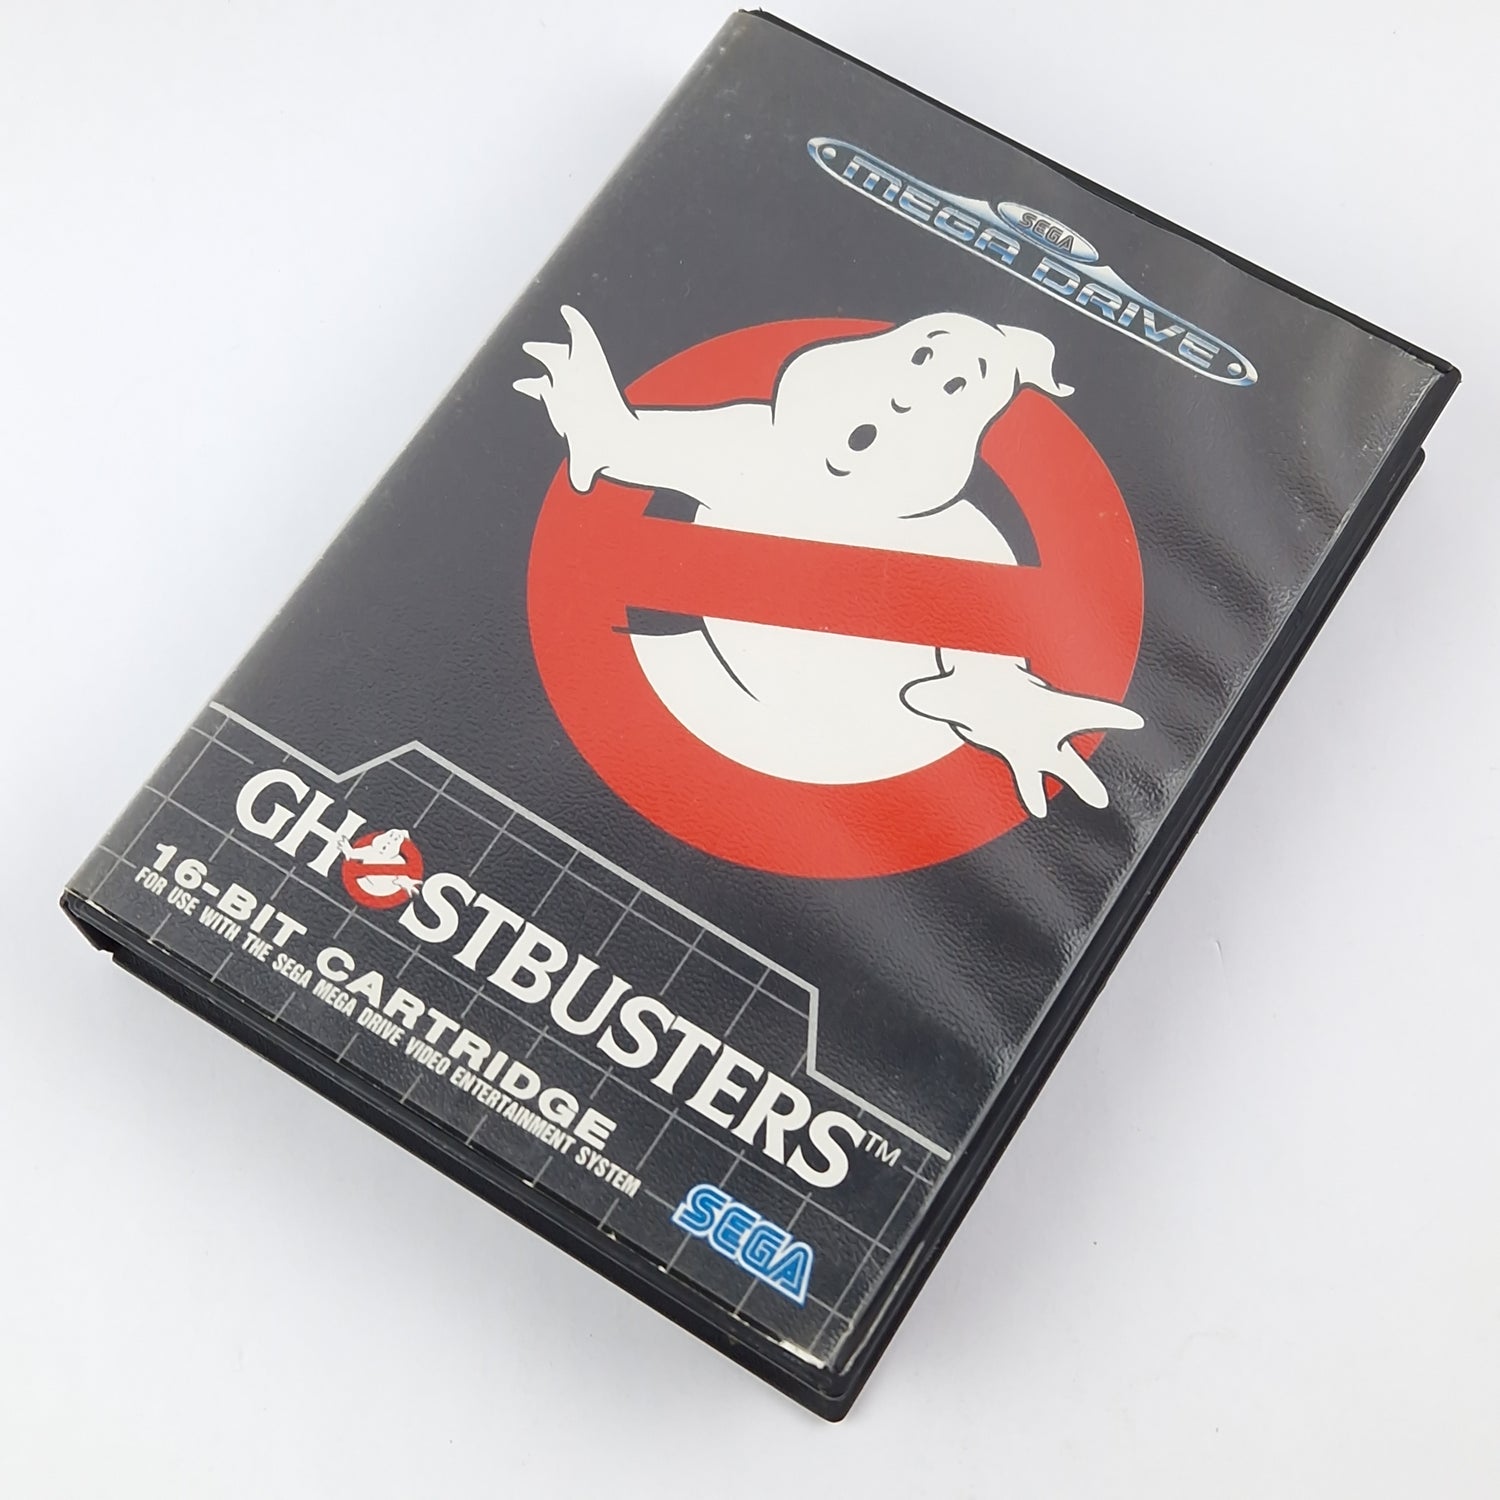 Sega Mega Drive Game: Ghostbusters - Module Instructions OVP cib / PAL MD Game